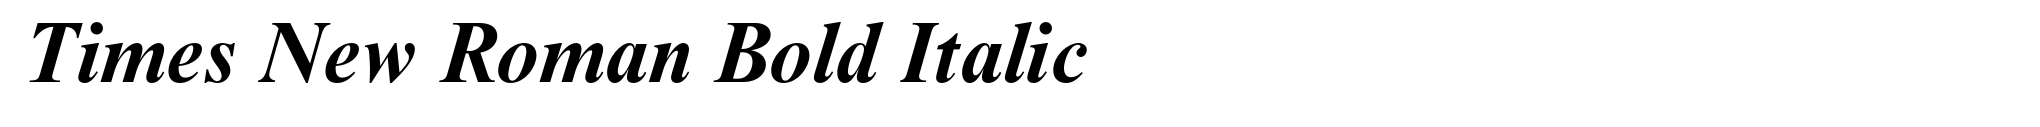 Times New Roman Bold Italic image